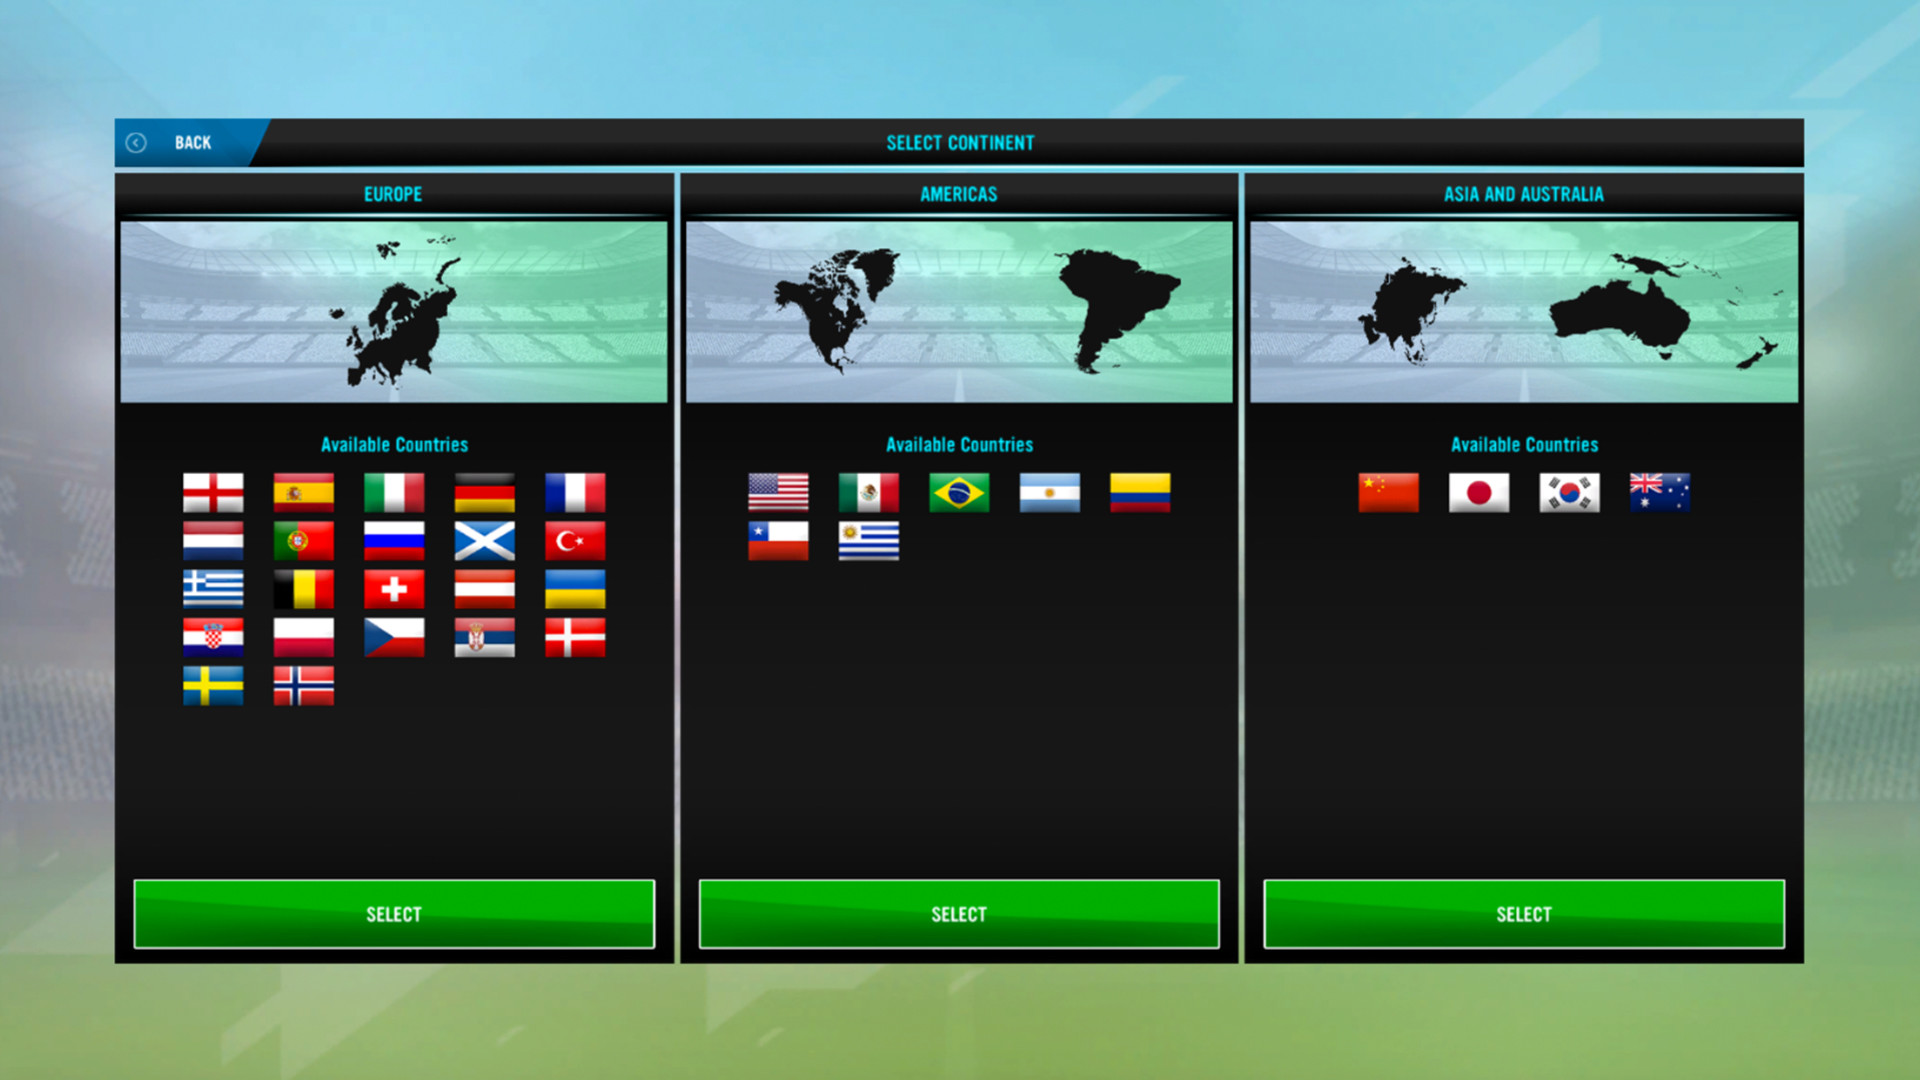 Soccer Manager 2021 screenshot